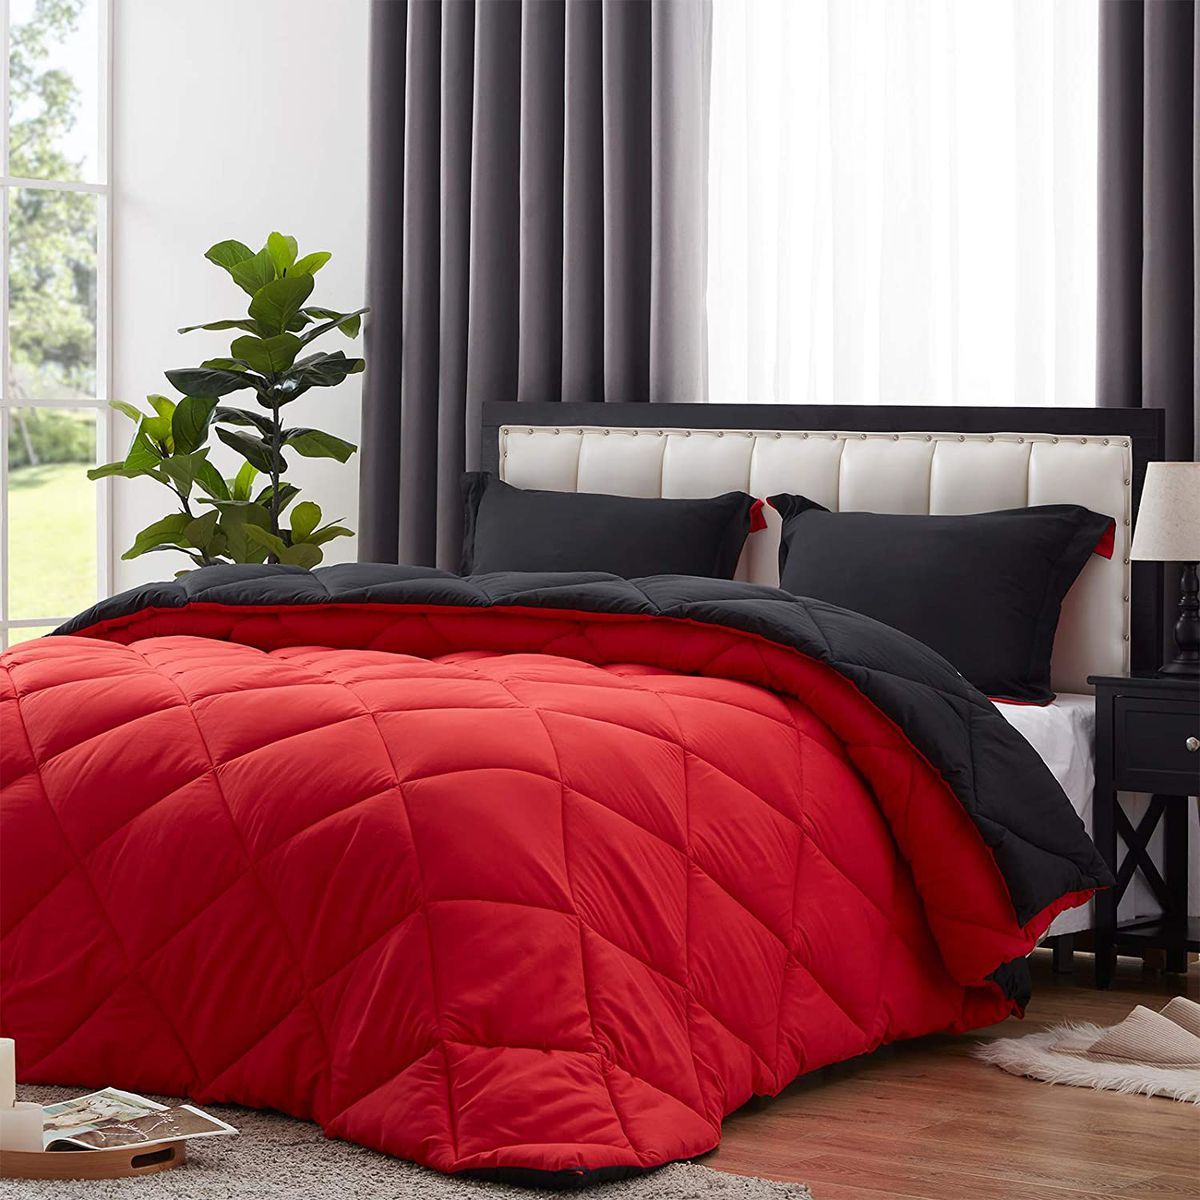 Reversible Comforter | Shop Today. Get it Tomorrow! | takealot.com